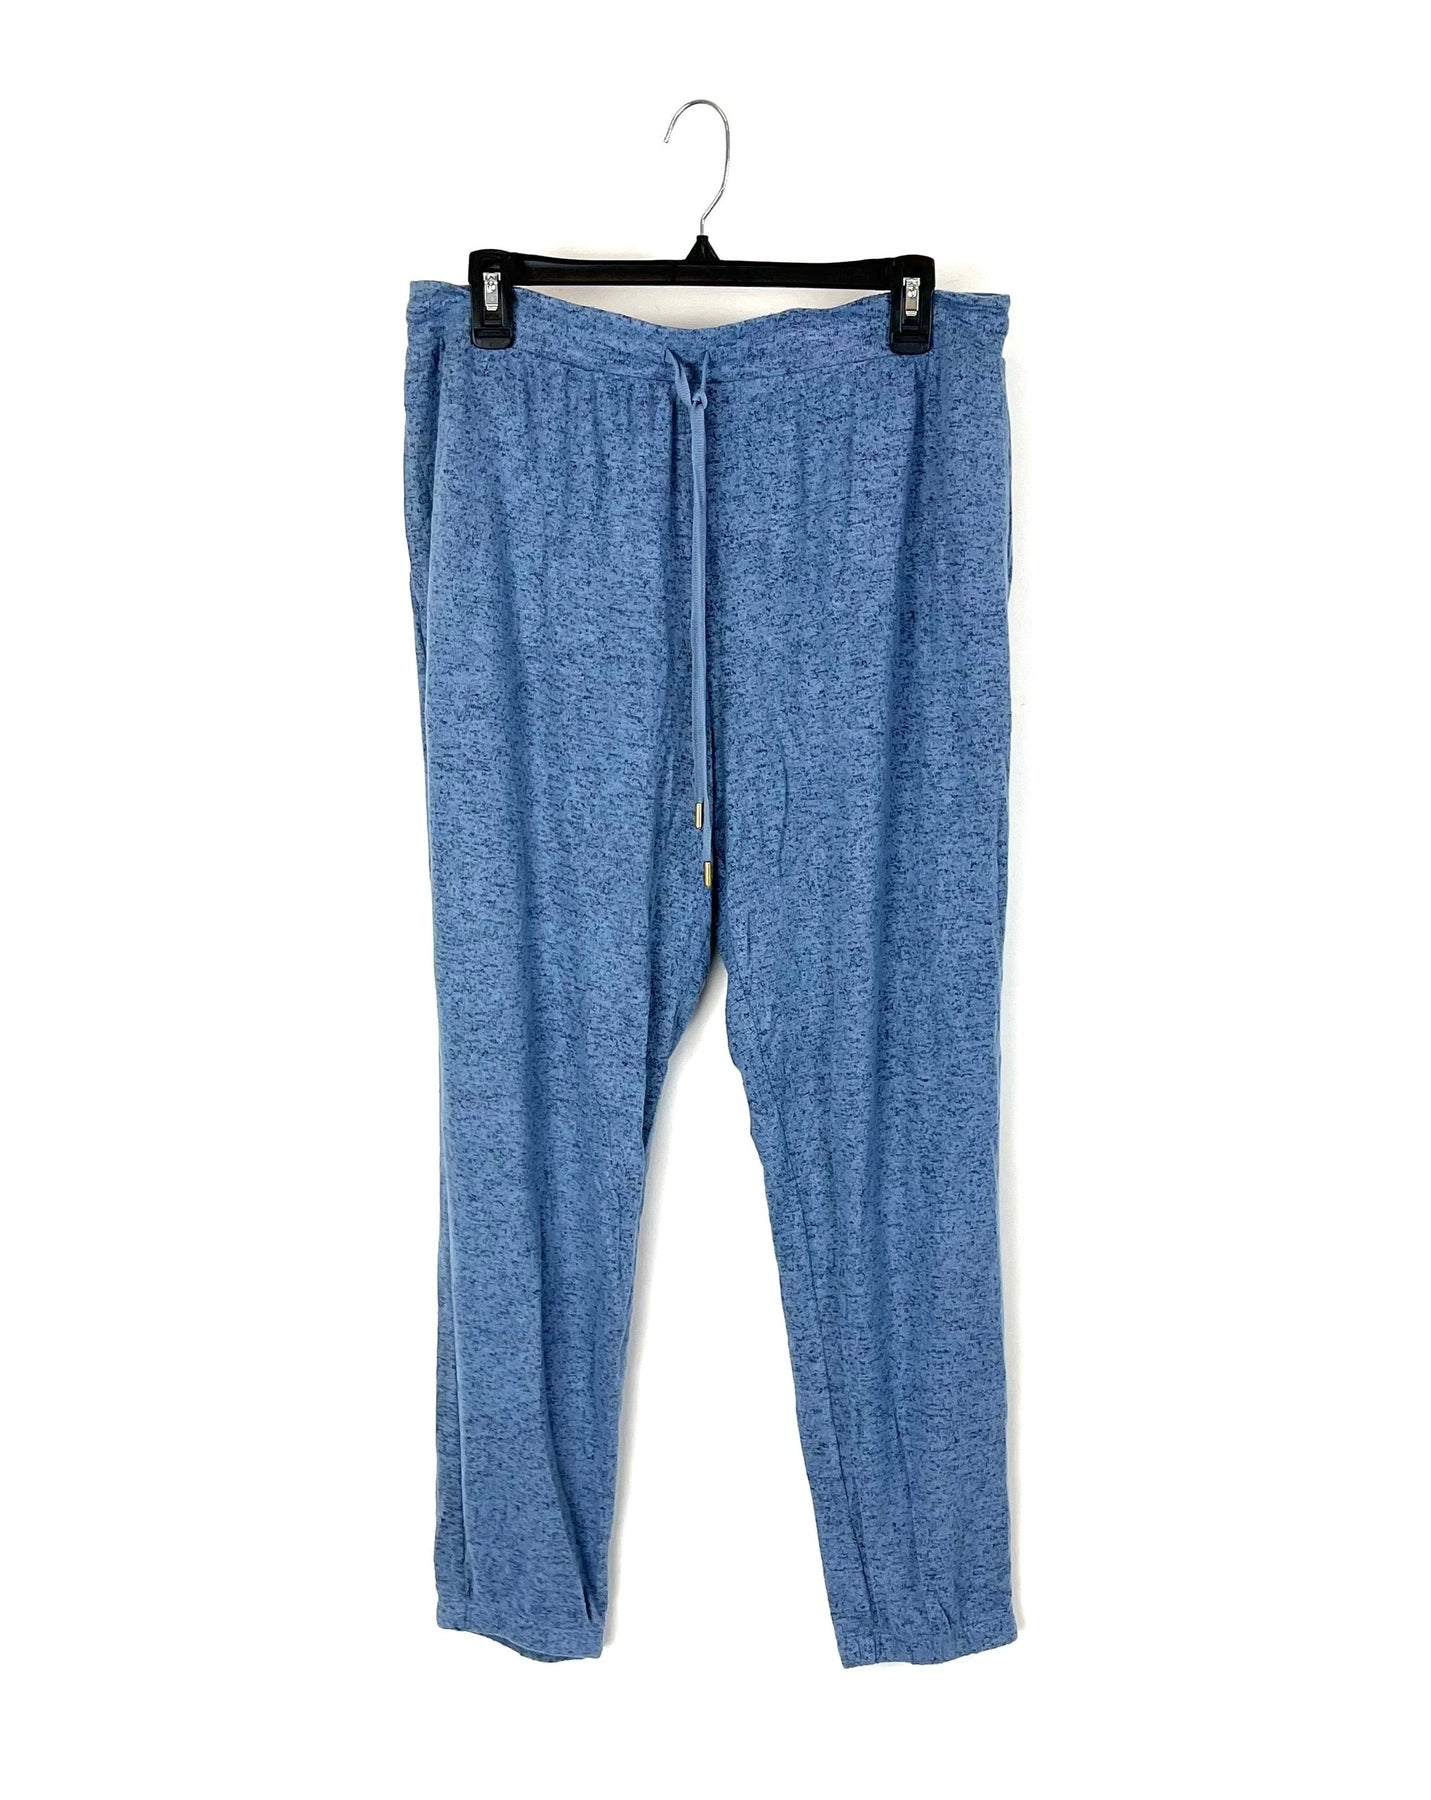 Blue Sleepwear / Lounge Pants - Size 1X – The Fashion Foundation